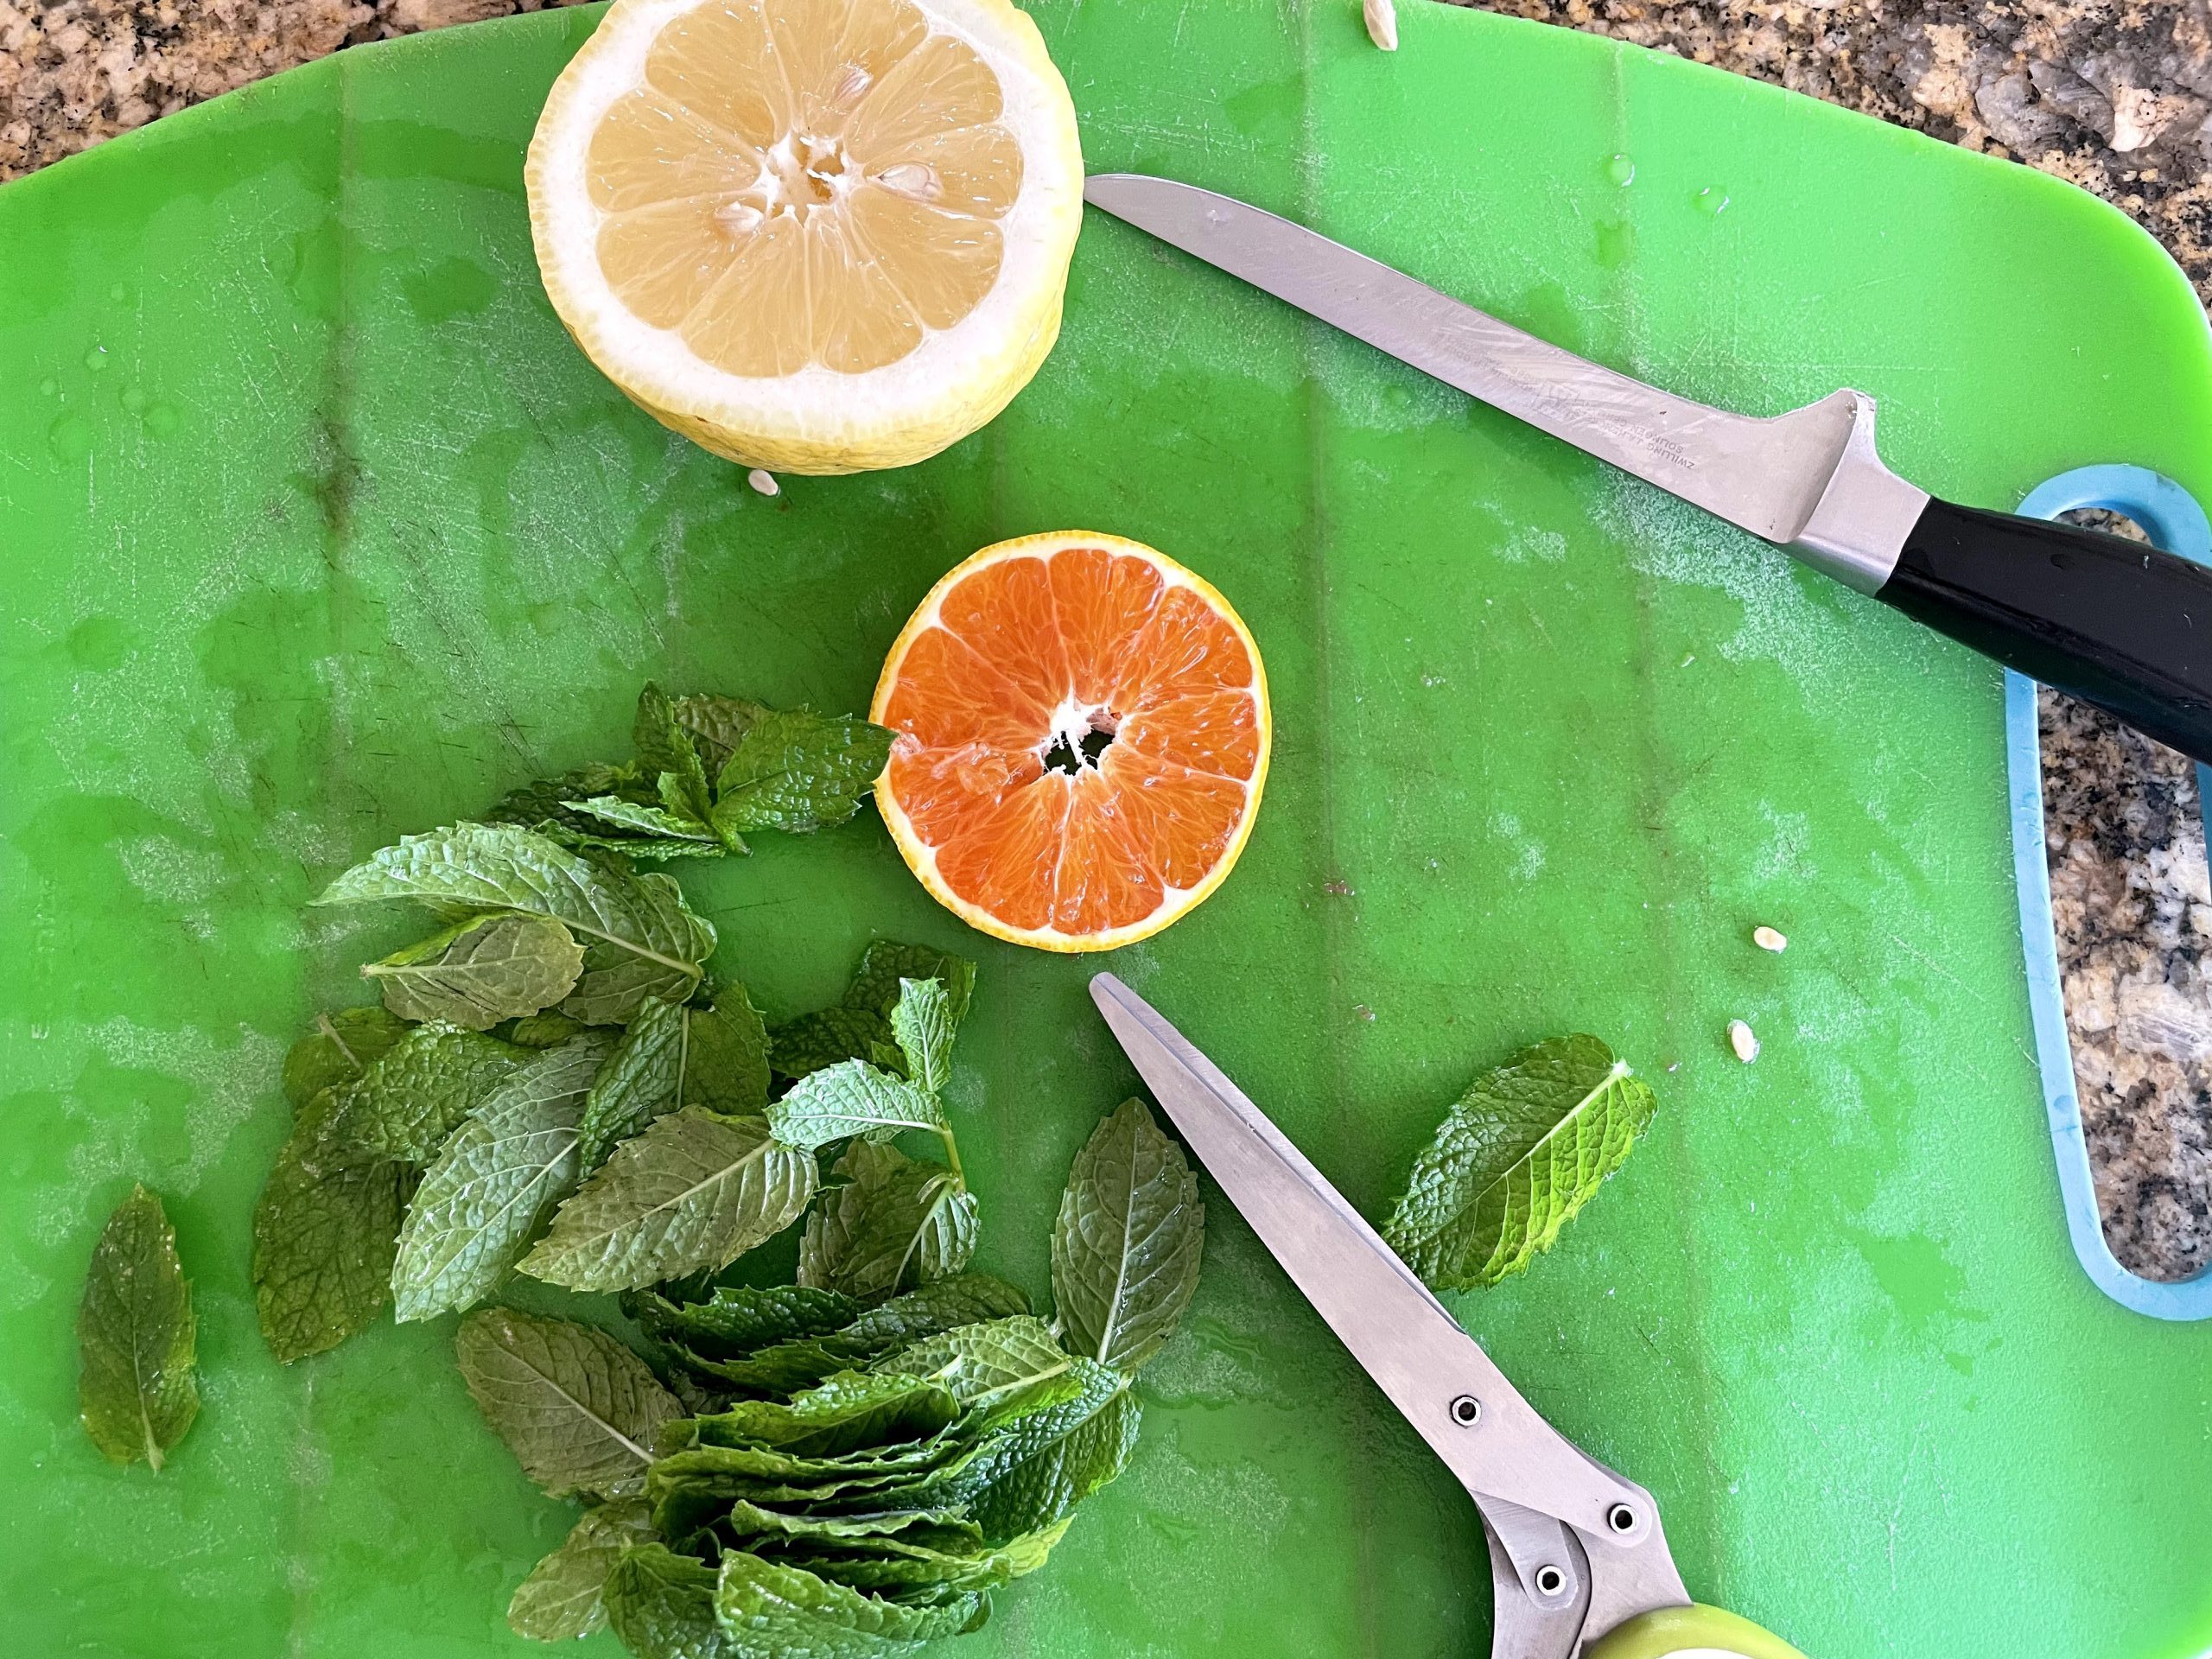 Chiffonade fresh mint and juice a fresh lemon and orange.